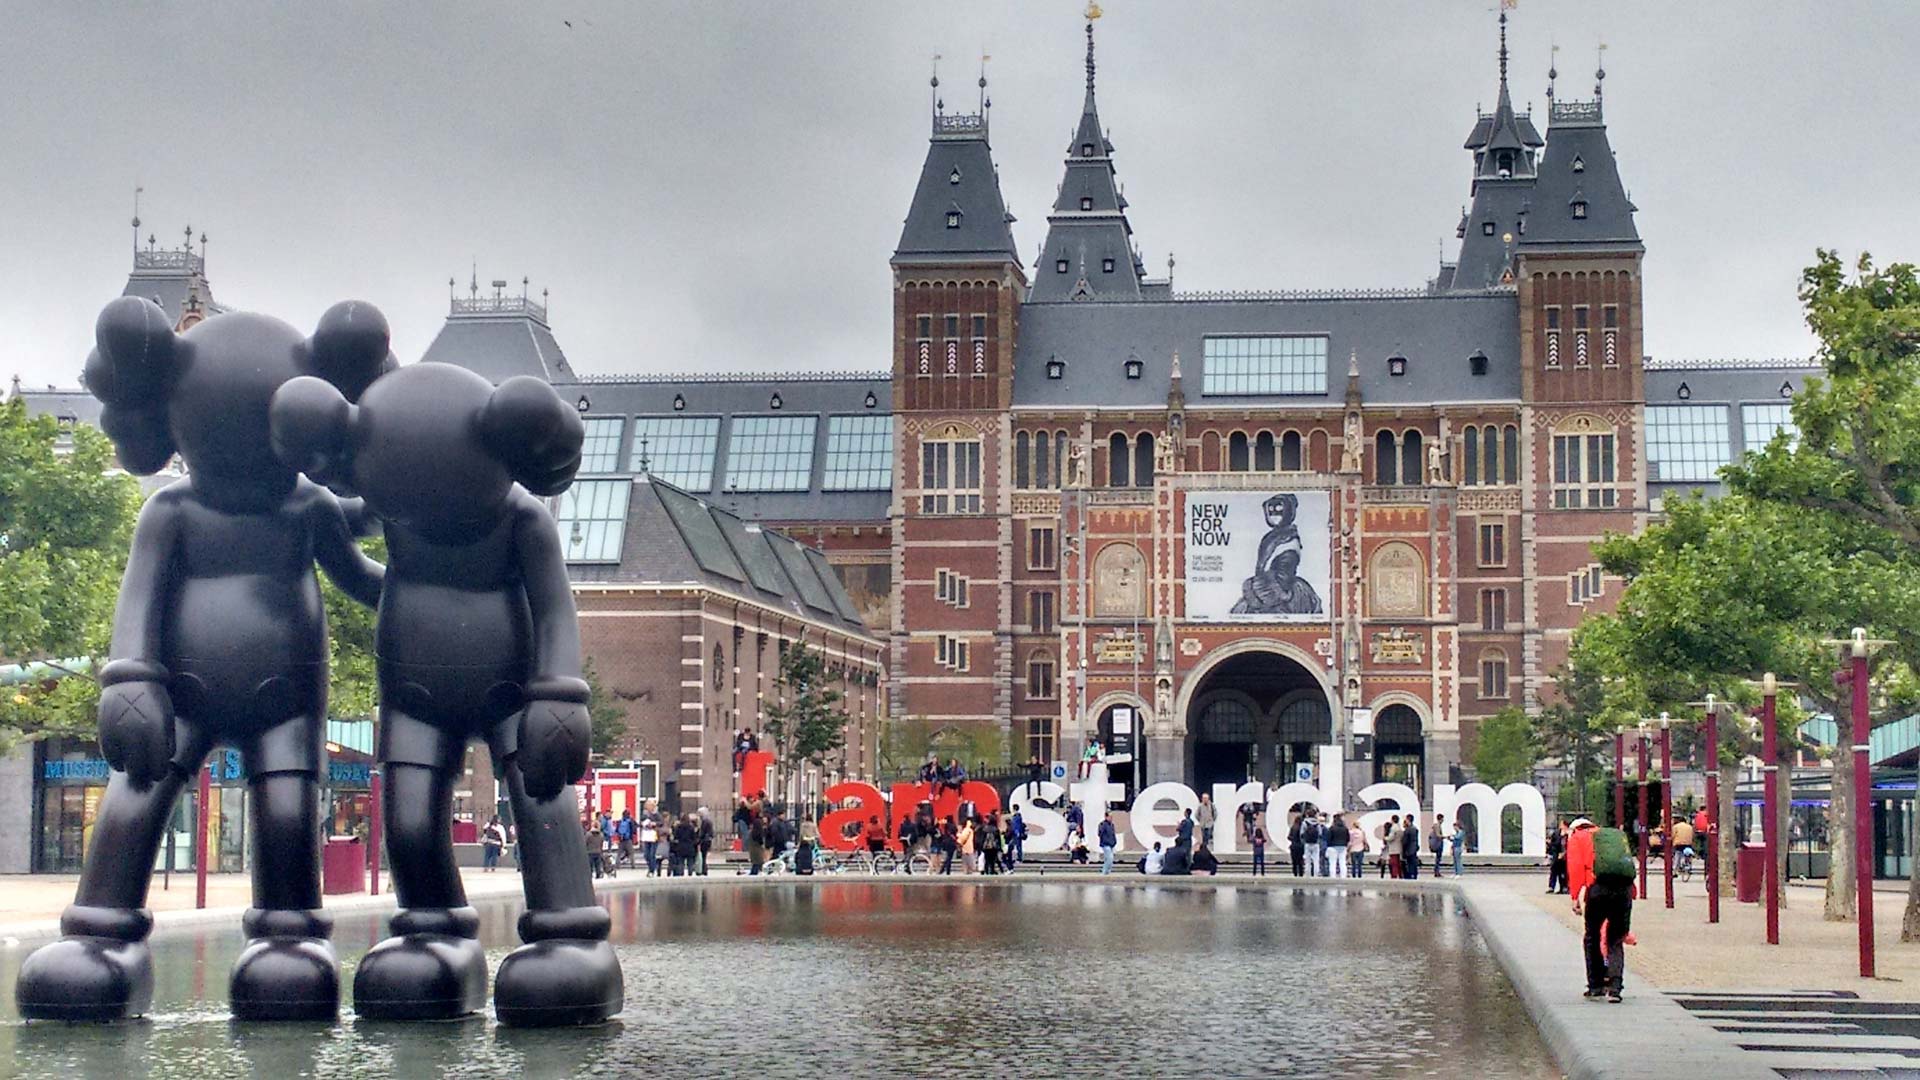 Amsterdam musea en cultuur